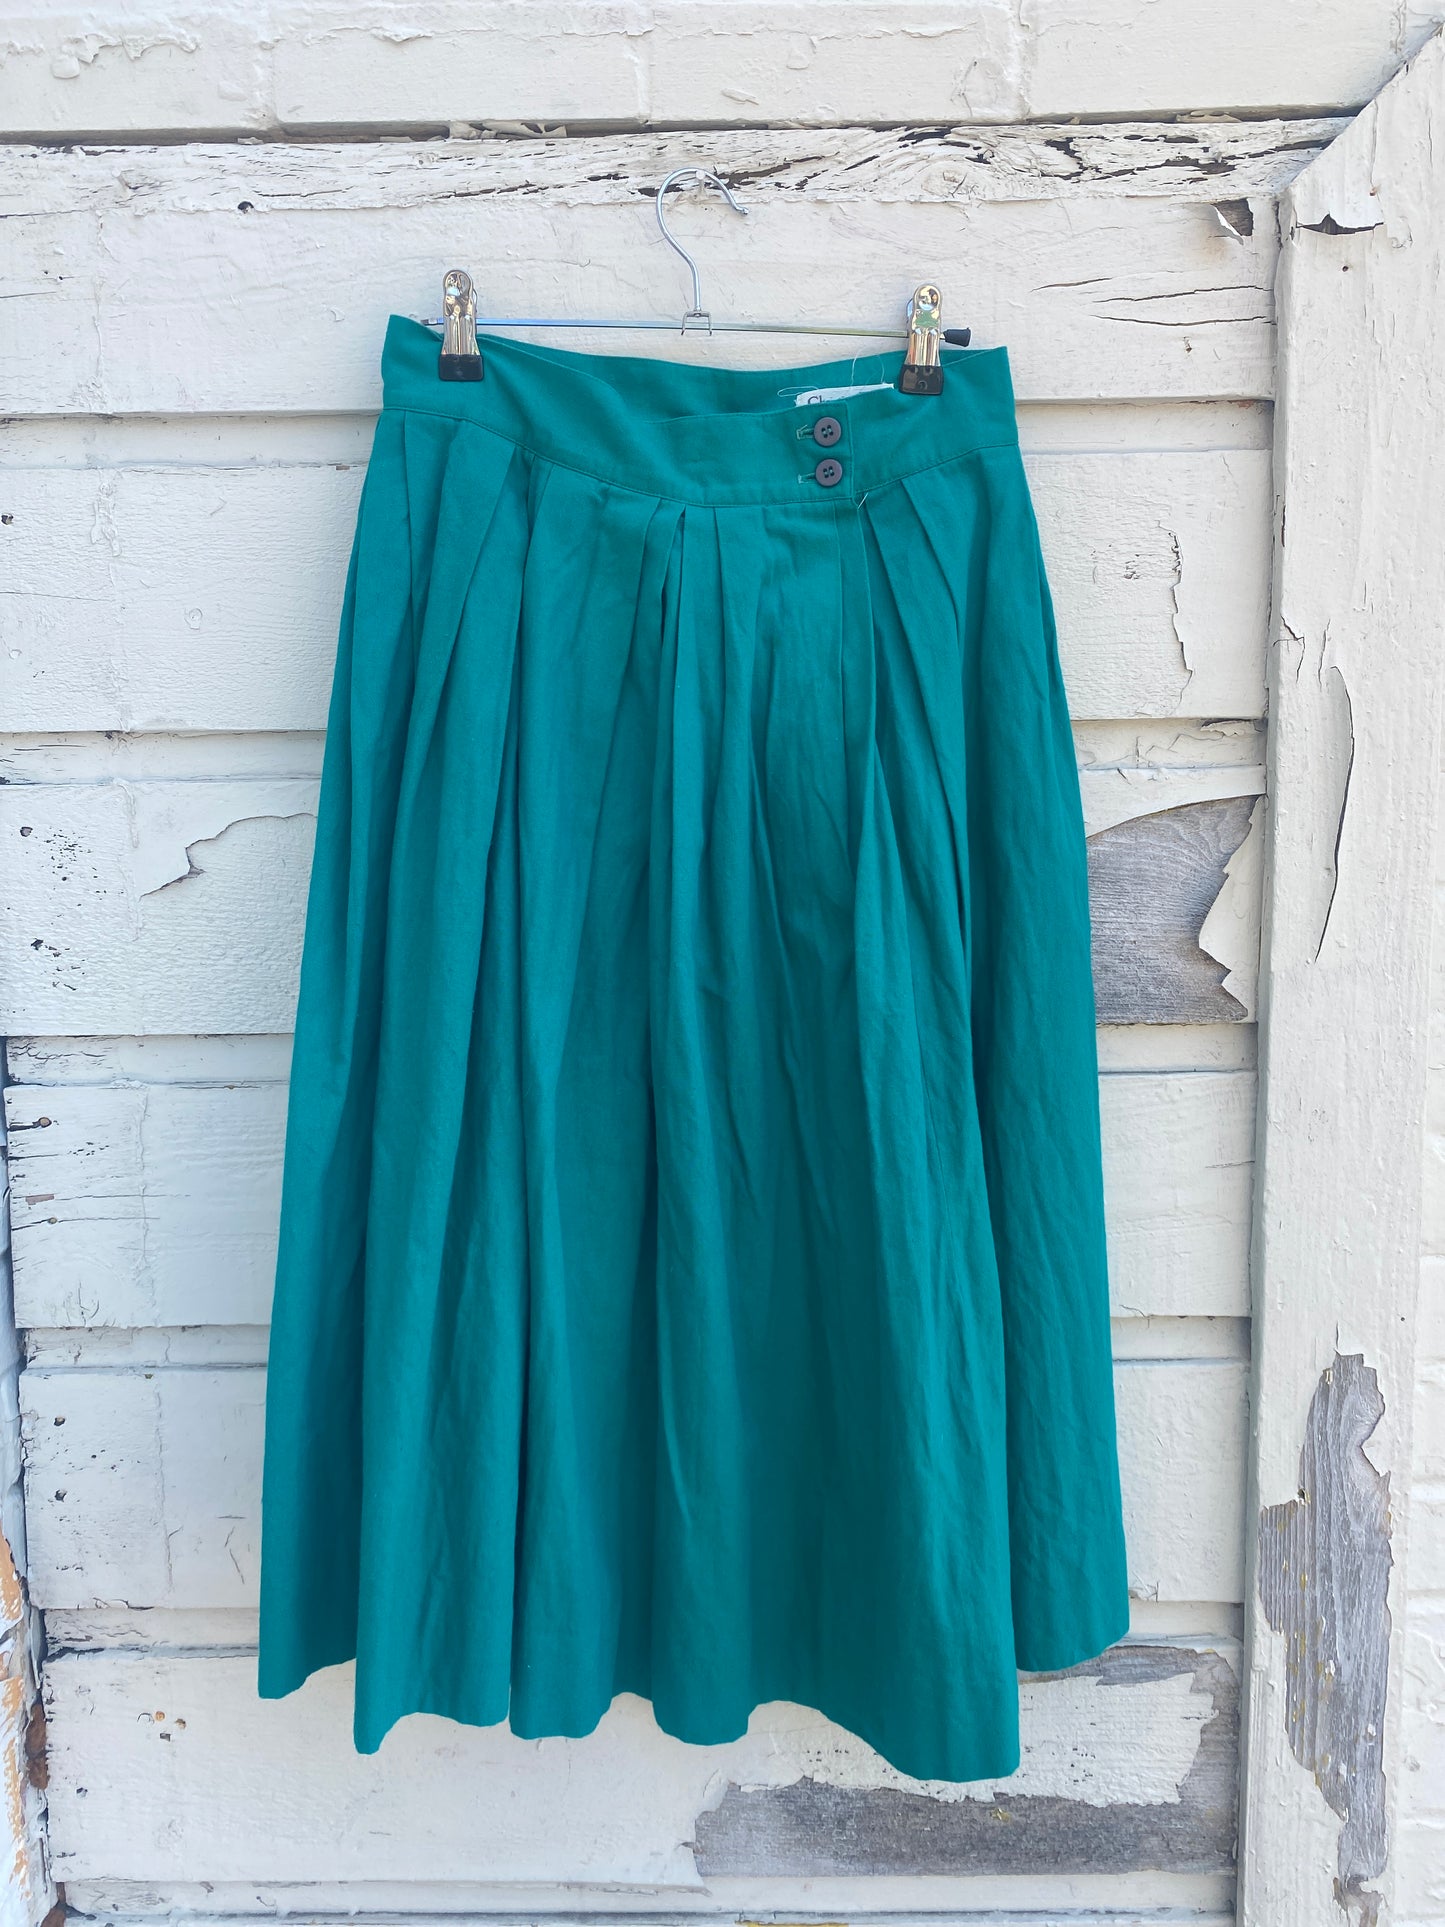 Vintage Christian Dior Separates Pleated Skirt medium/small 27in waist